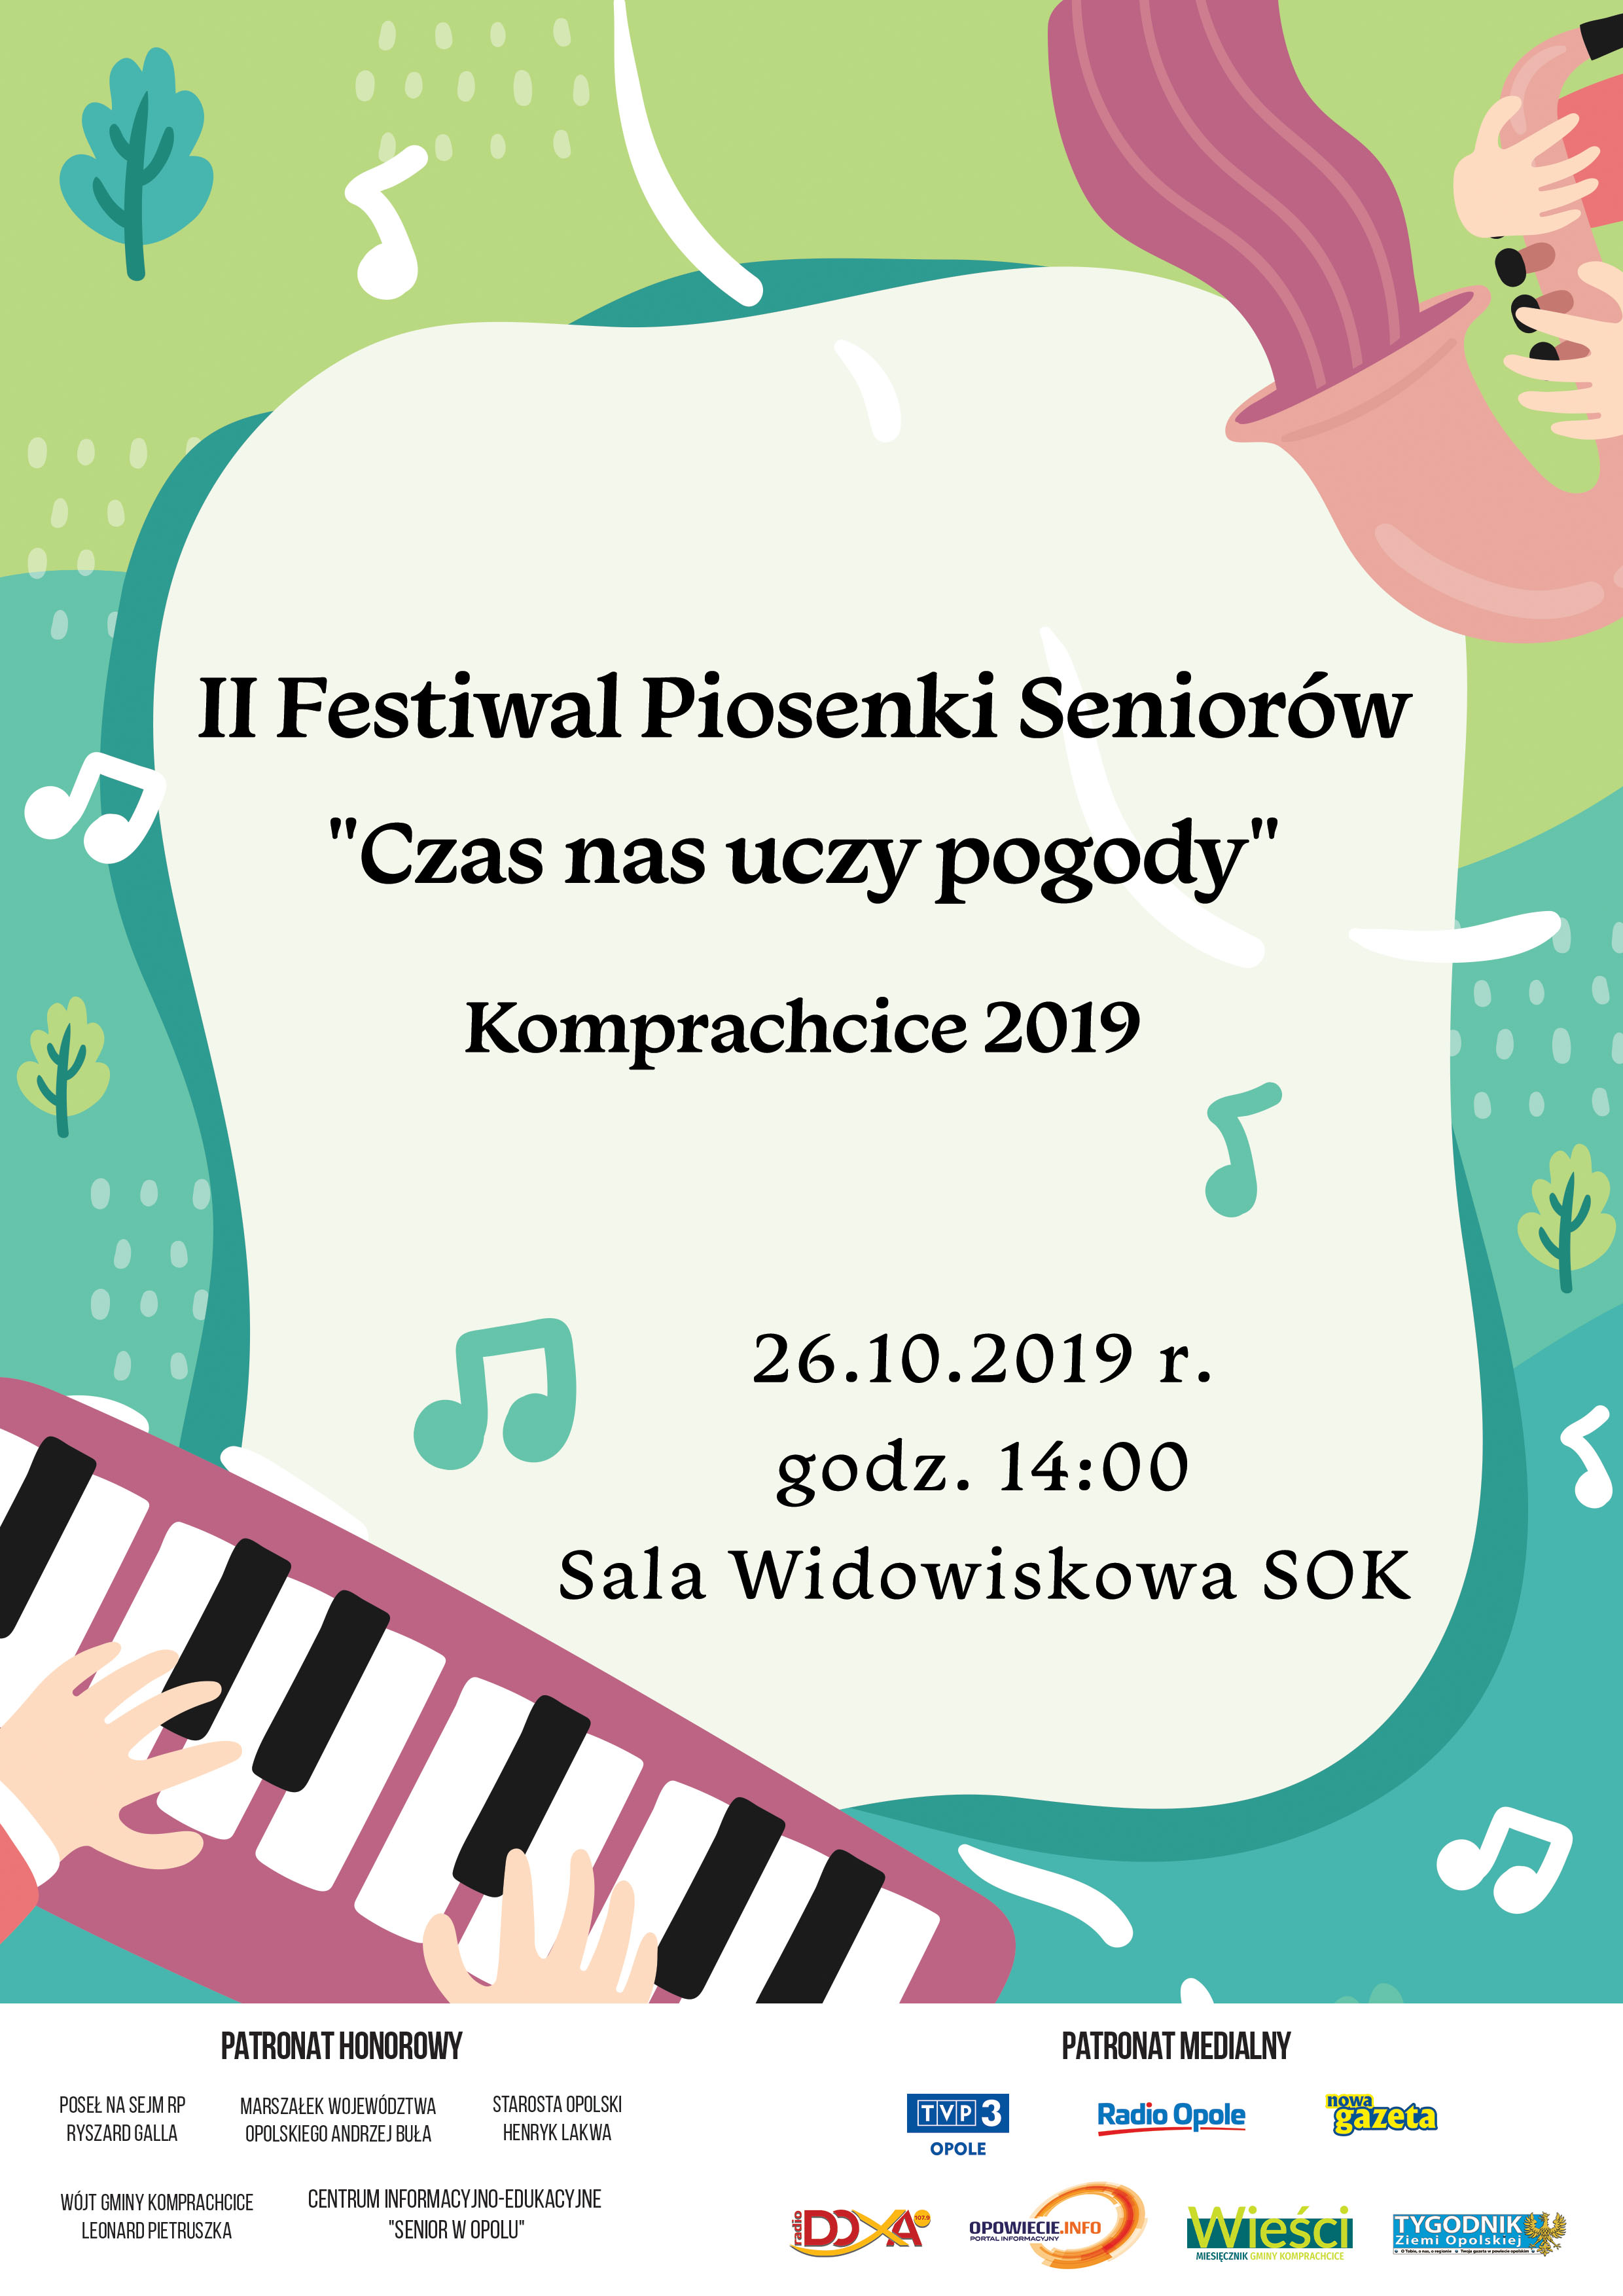 II Festiwal Piosenki Seniorów w Komprachcicach